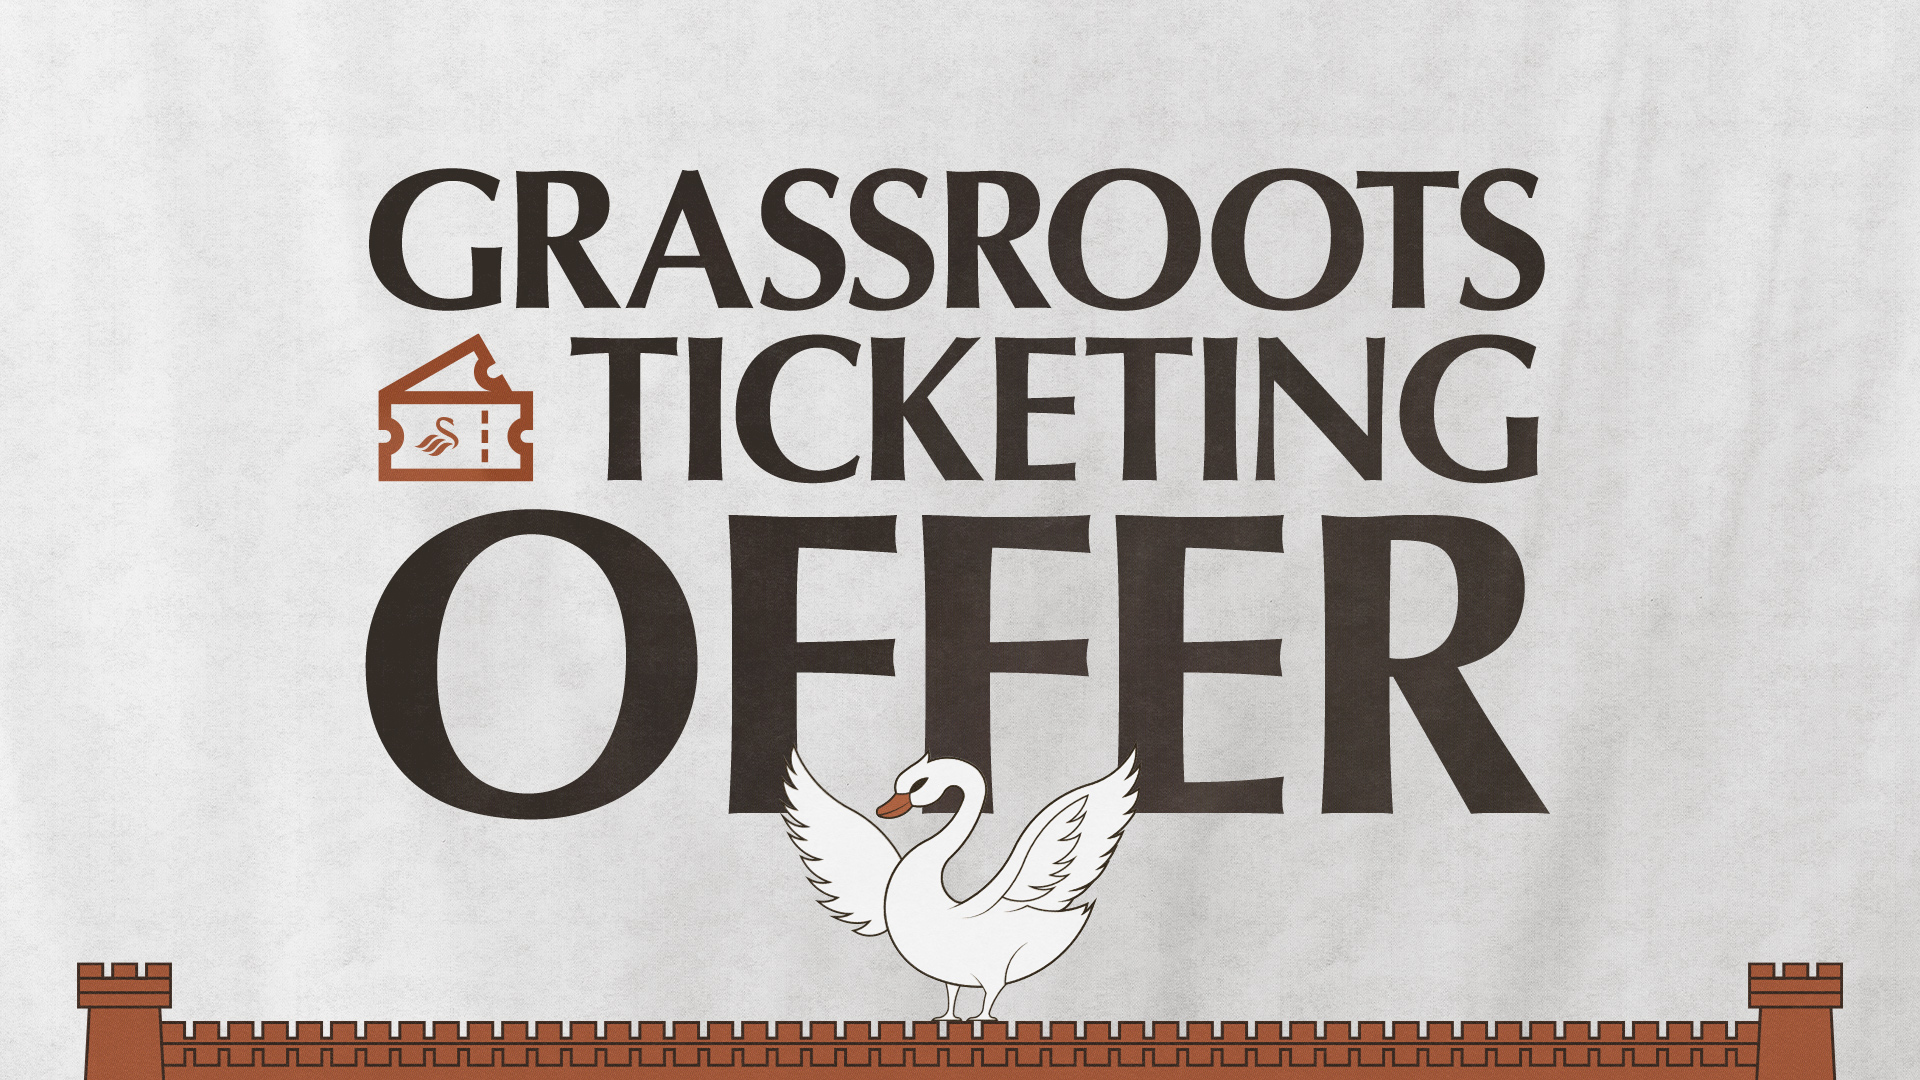 Grassroots ticket offer